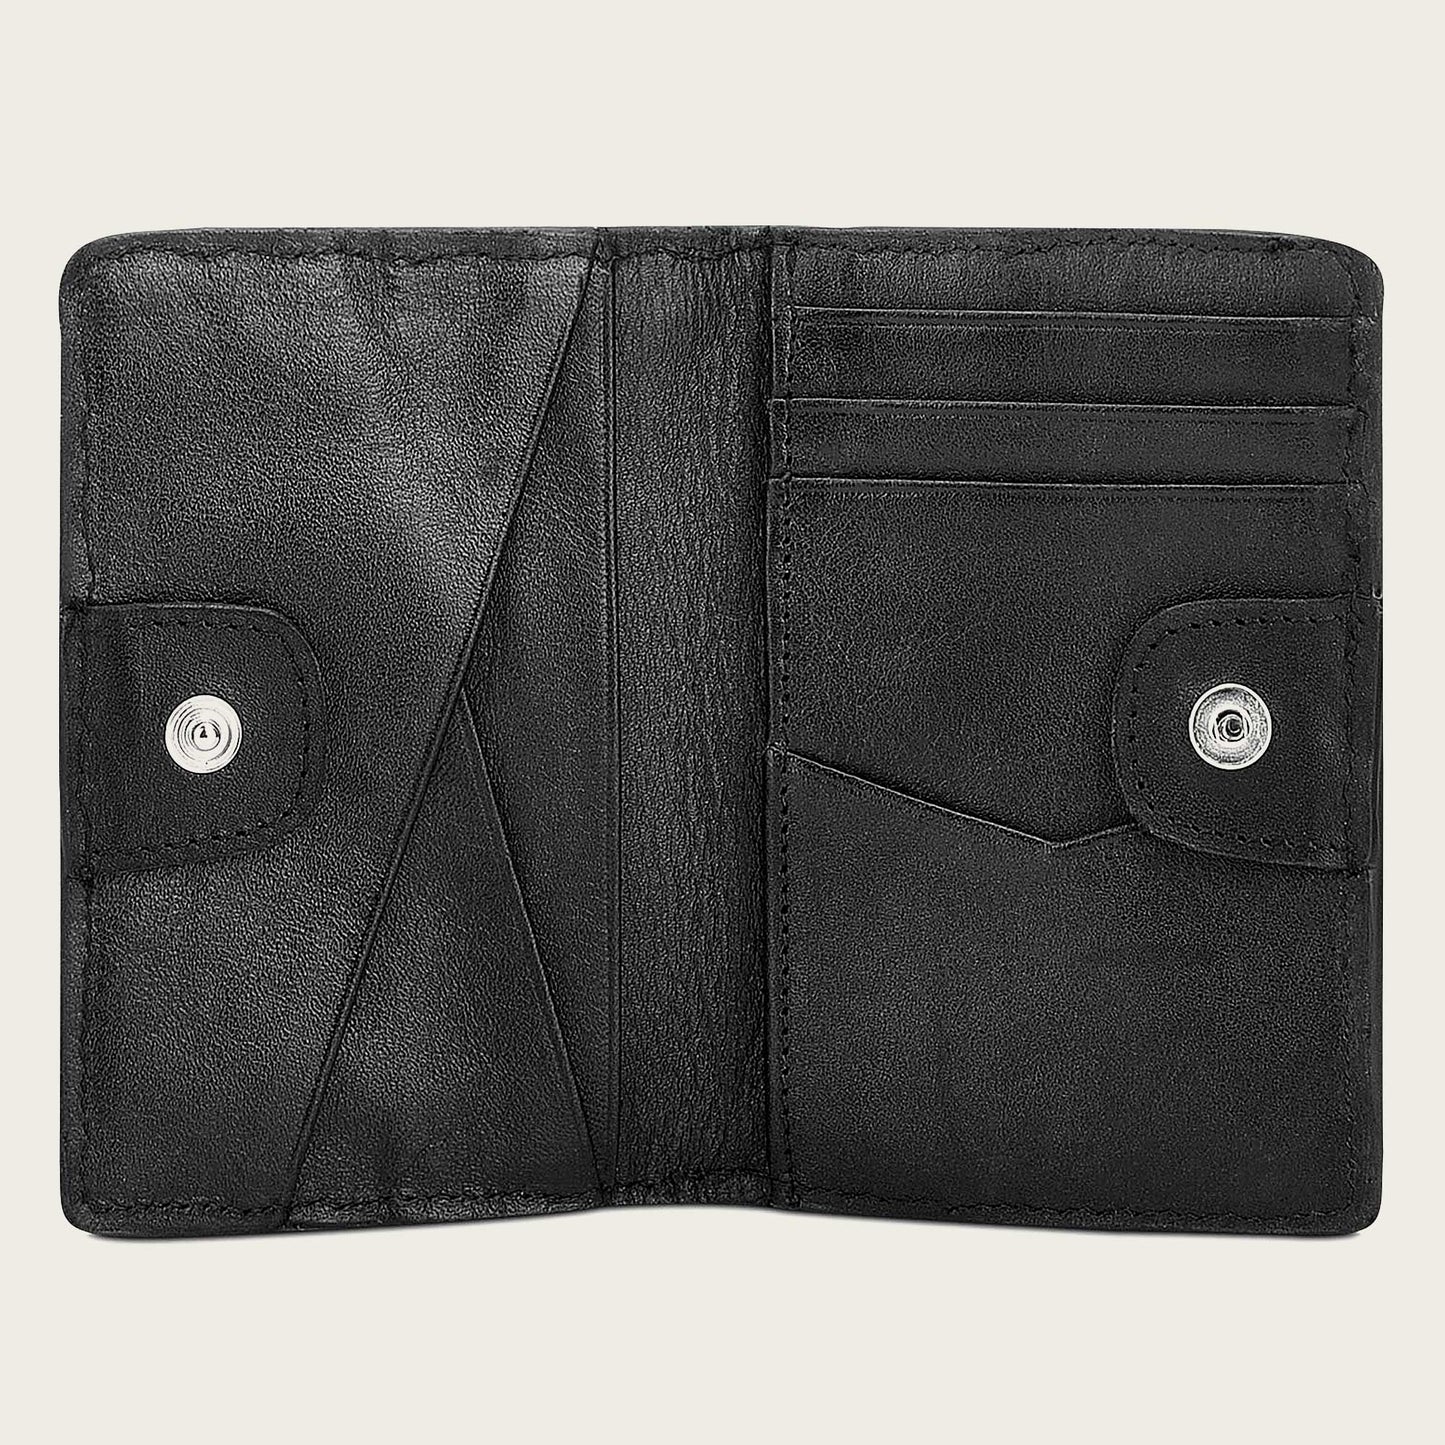 Handmade black leather cardholder